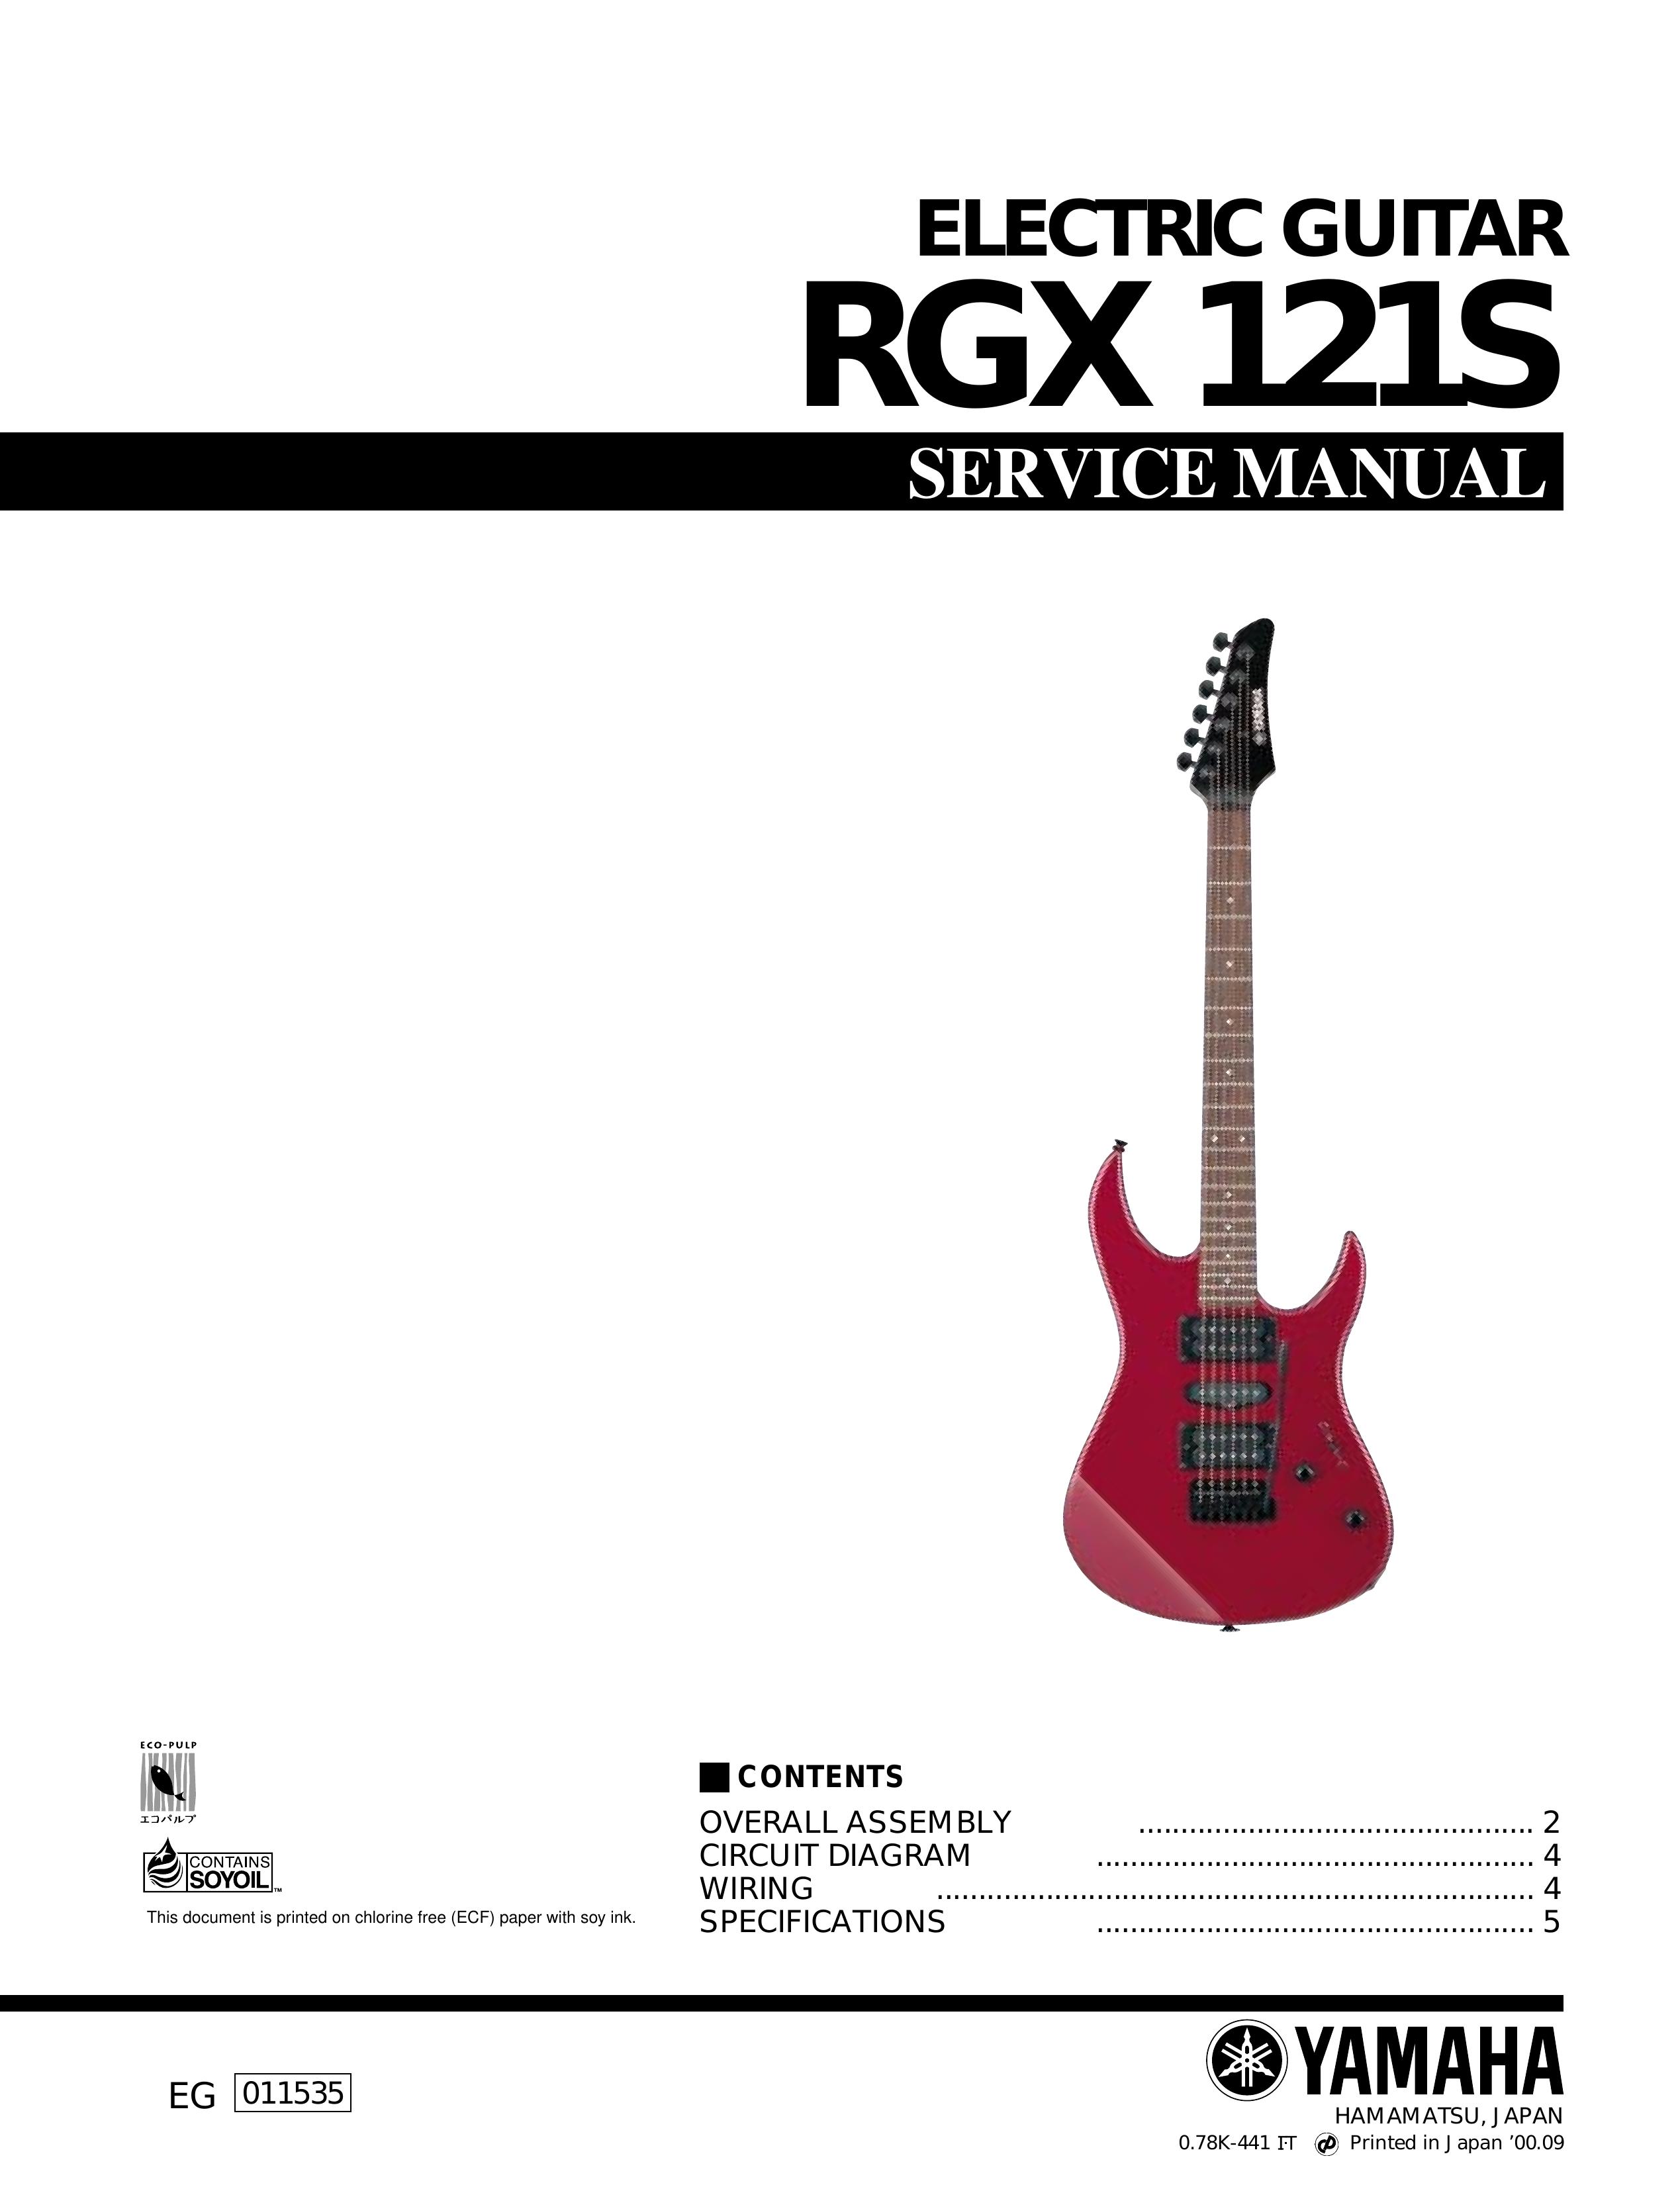 Yamaha EG 011535 Guitar User Manual